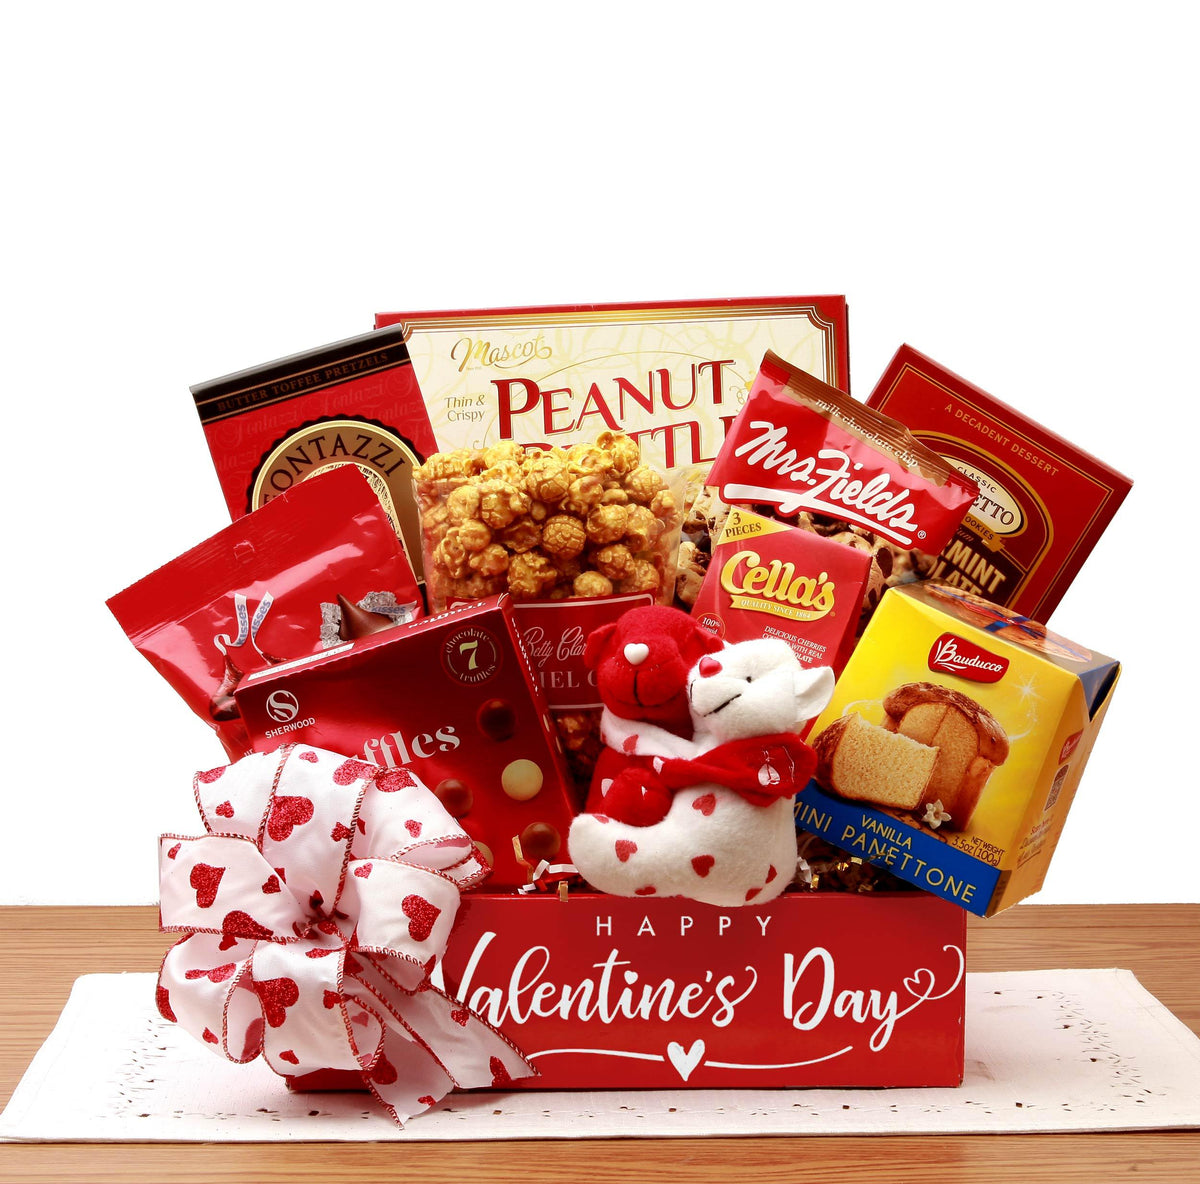 GHIRARDELLI Sweet Hearts Premium Chocolate Truffle Assortment Gift for  Valentines, 4.4 oz - Walmart.com